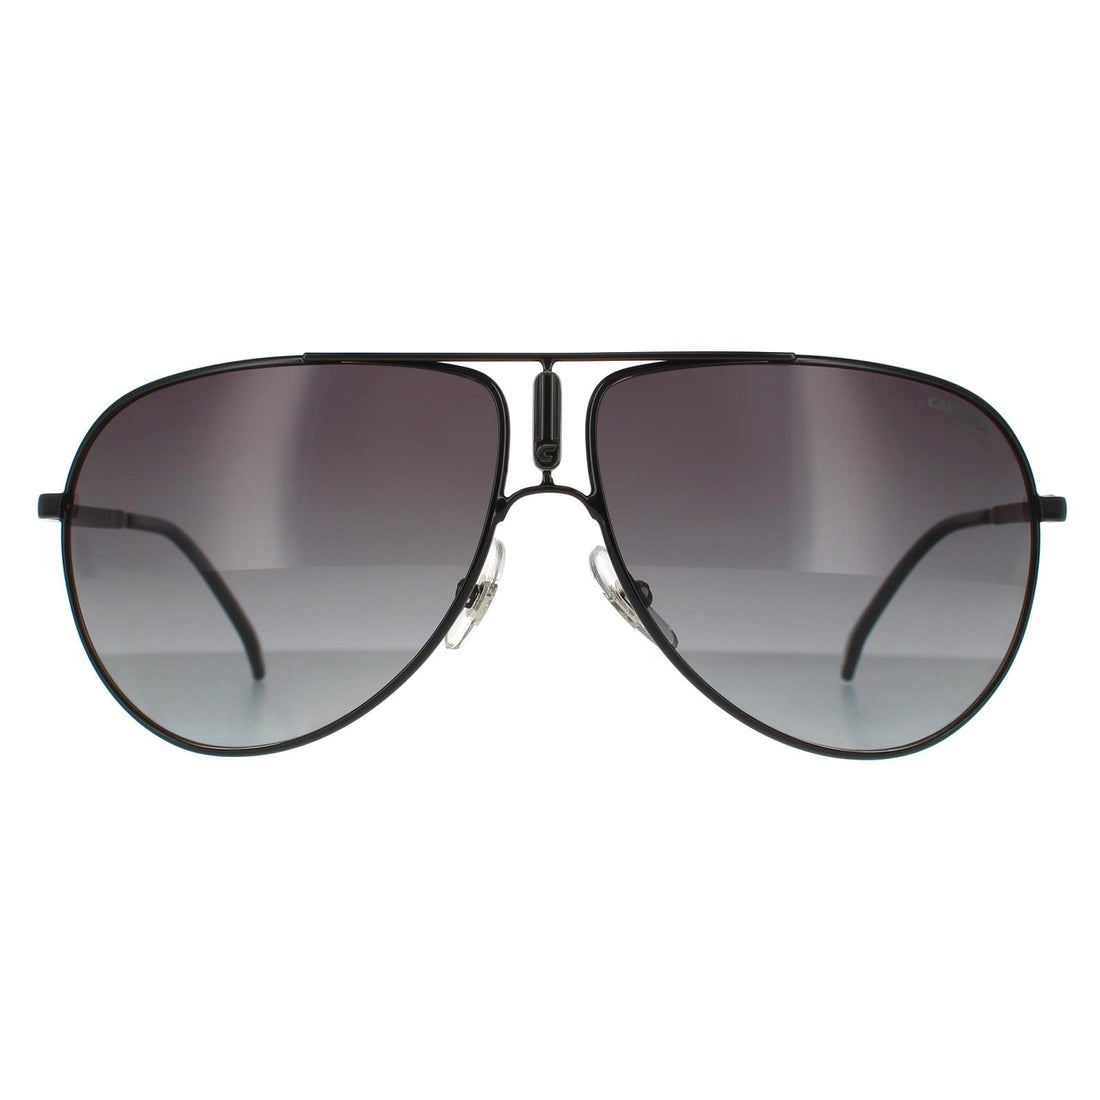 Carrera Gipsy65 Sunglasses Black / Grey Gradient